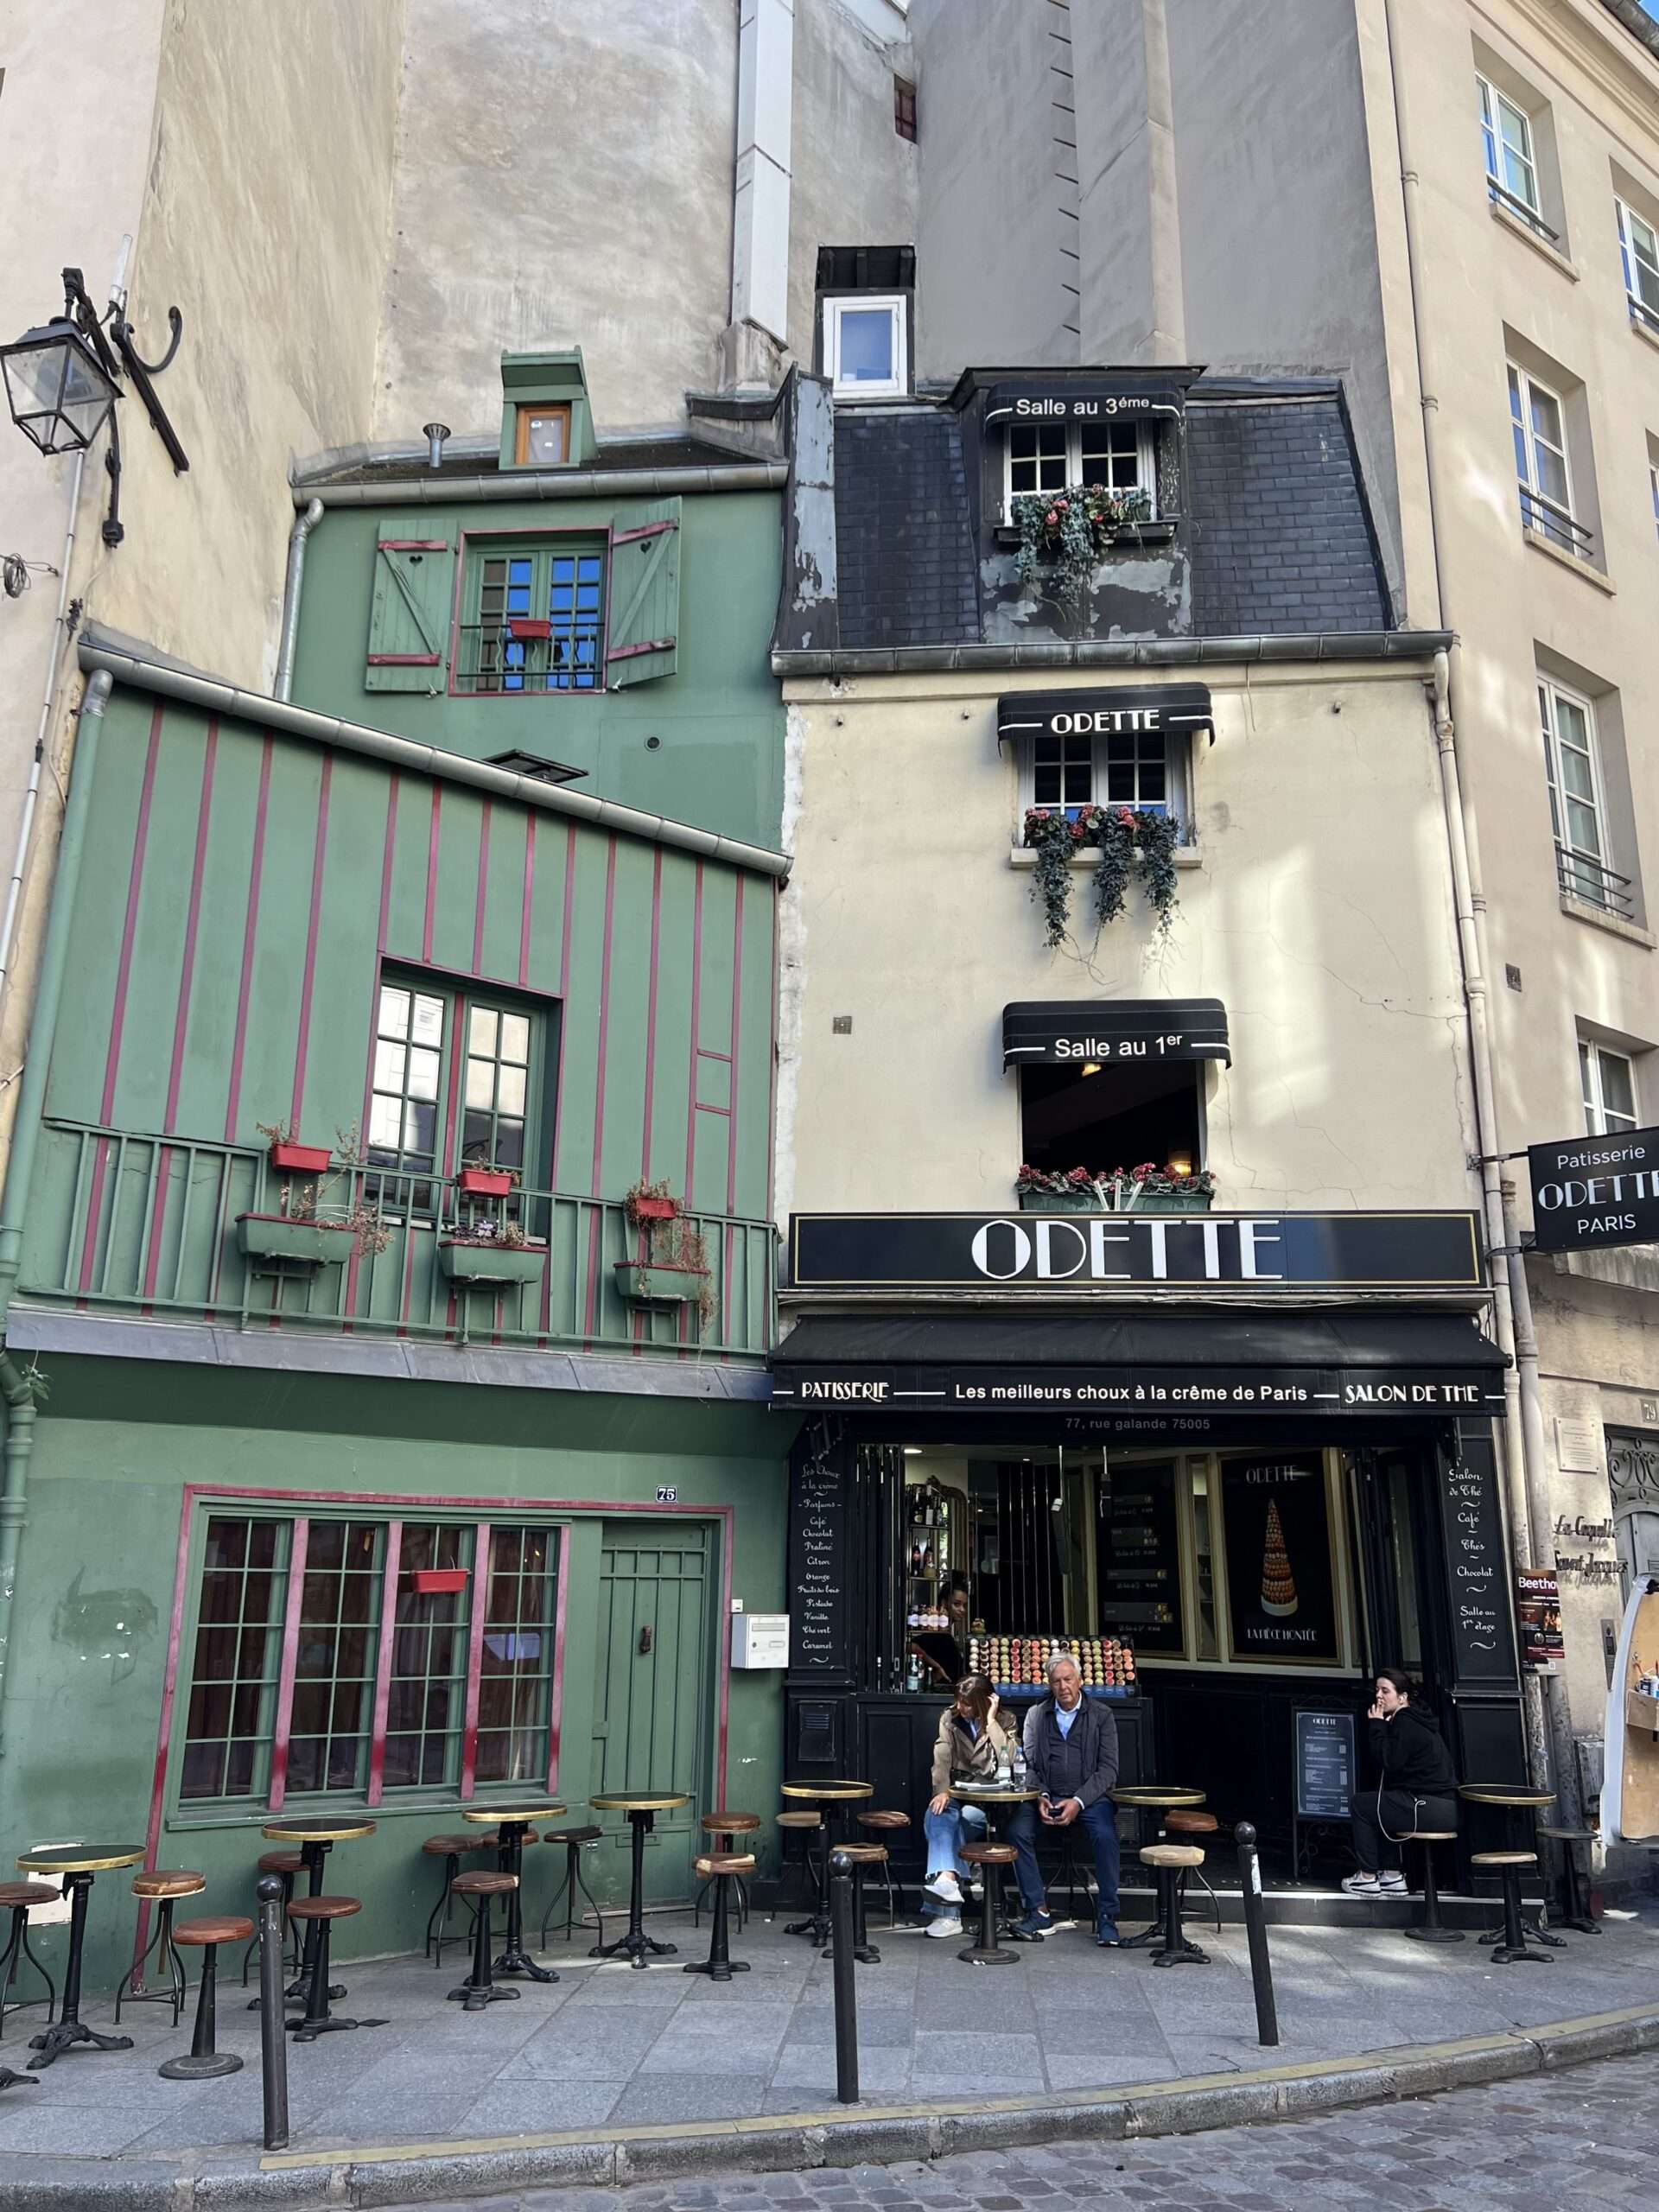 Odette Paris and its Choux Pastries - Croissants and Cafes